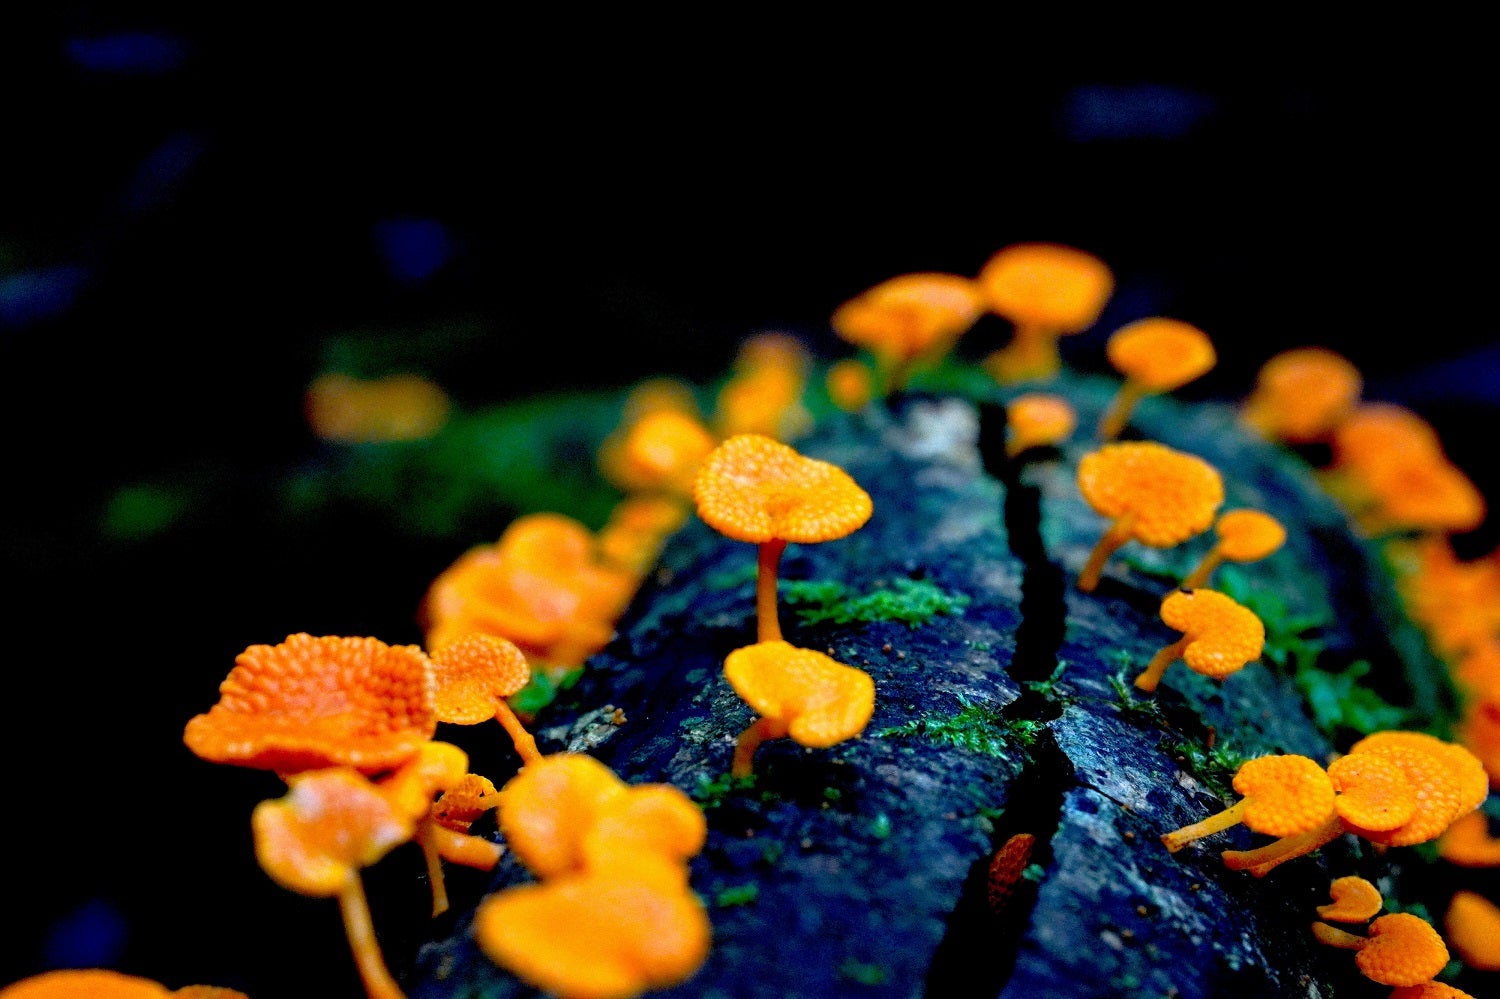 Fruiting bodies of small orange fungi